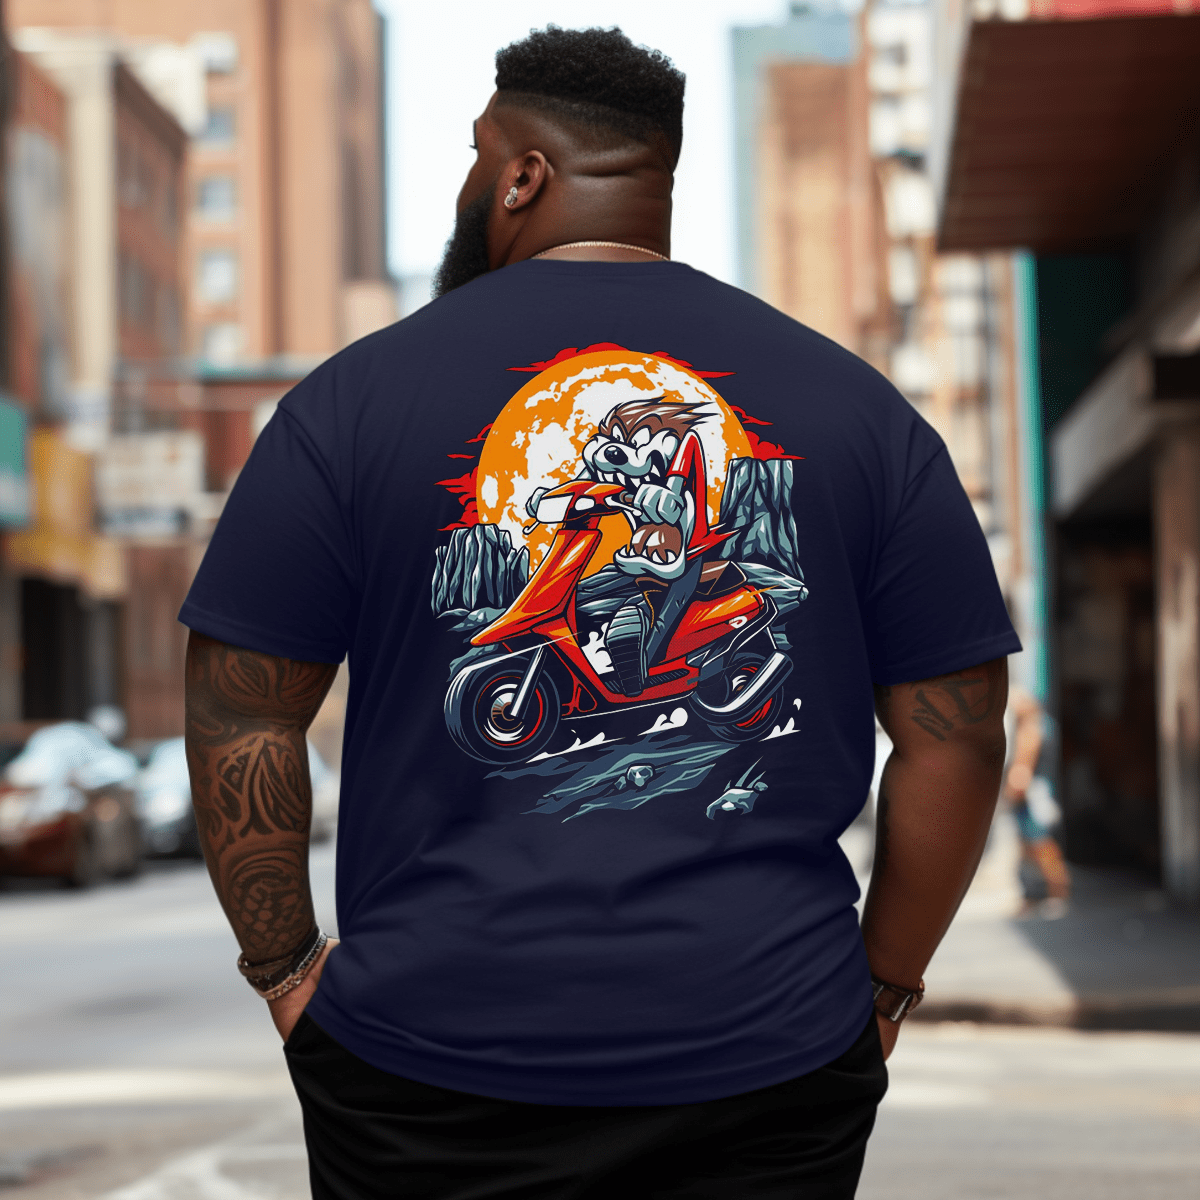 Brave Rider Men T-Shirt OverSize Plus Size Man Clothing 1XL-9XL